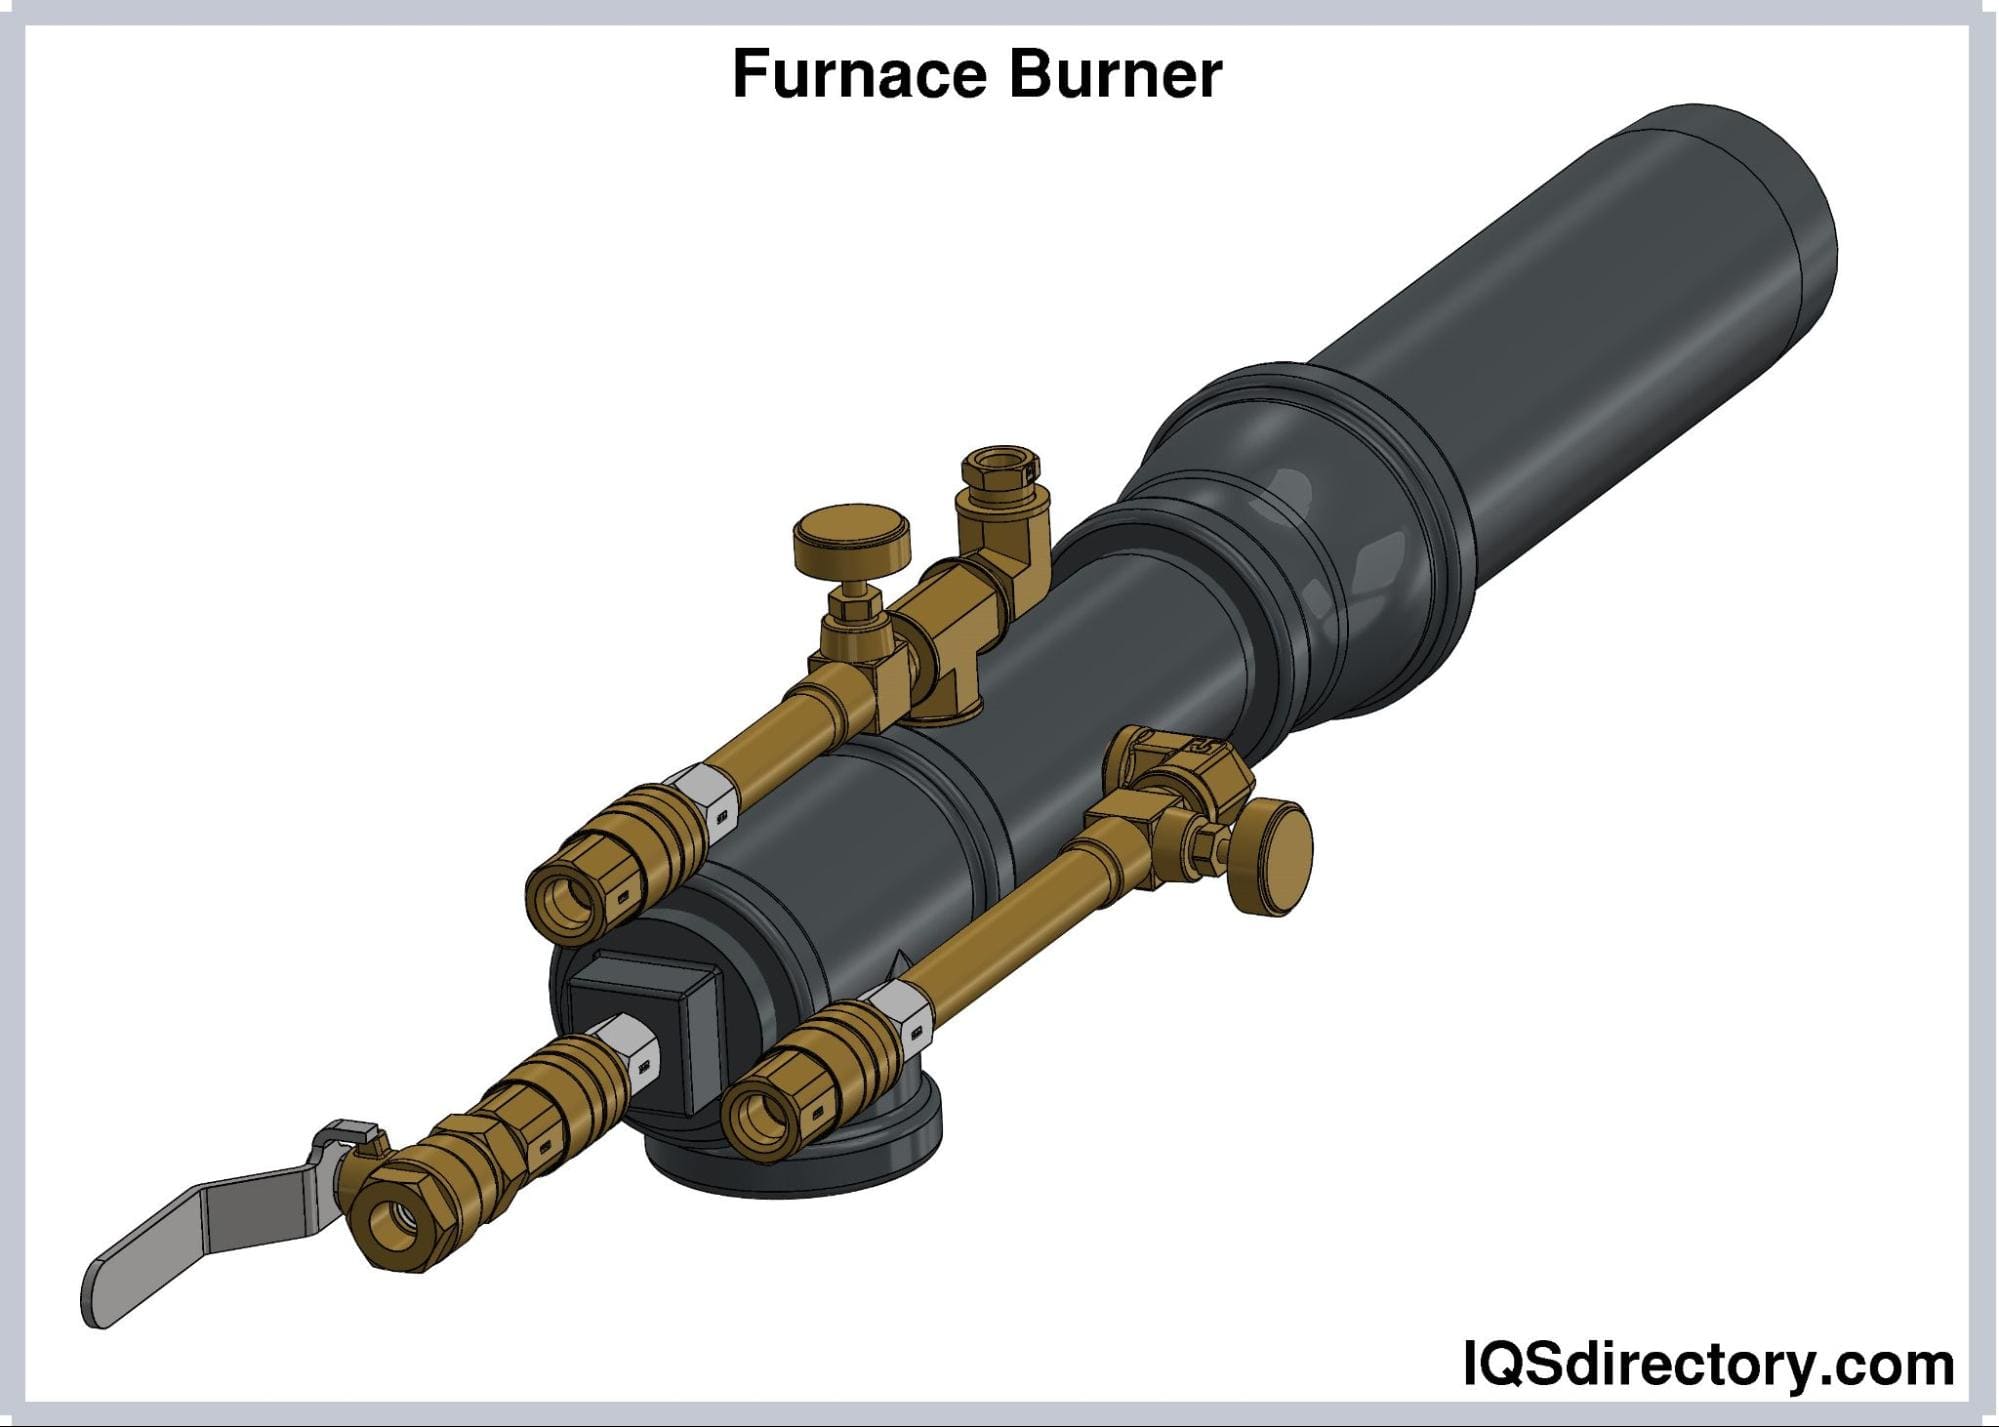 Furnace Burner